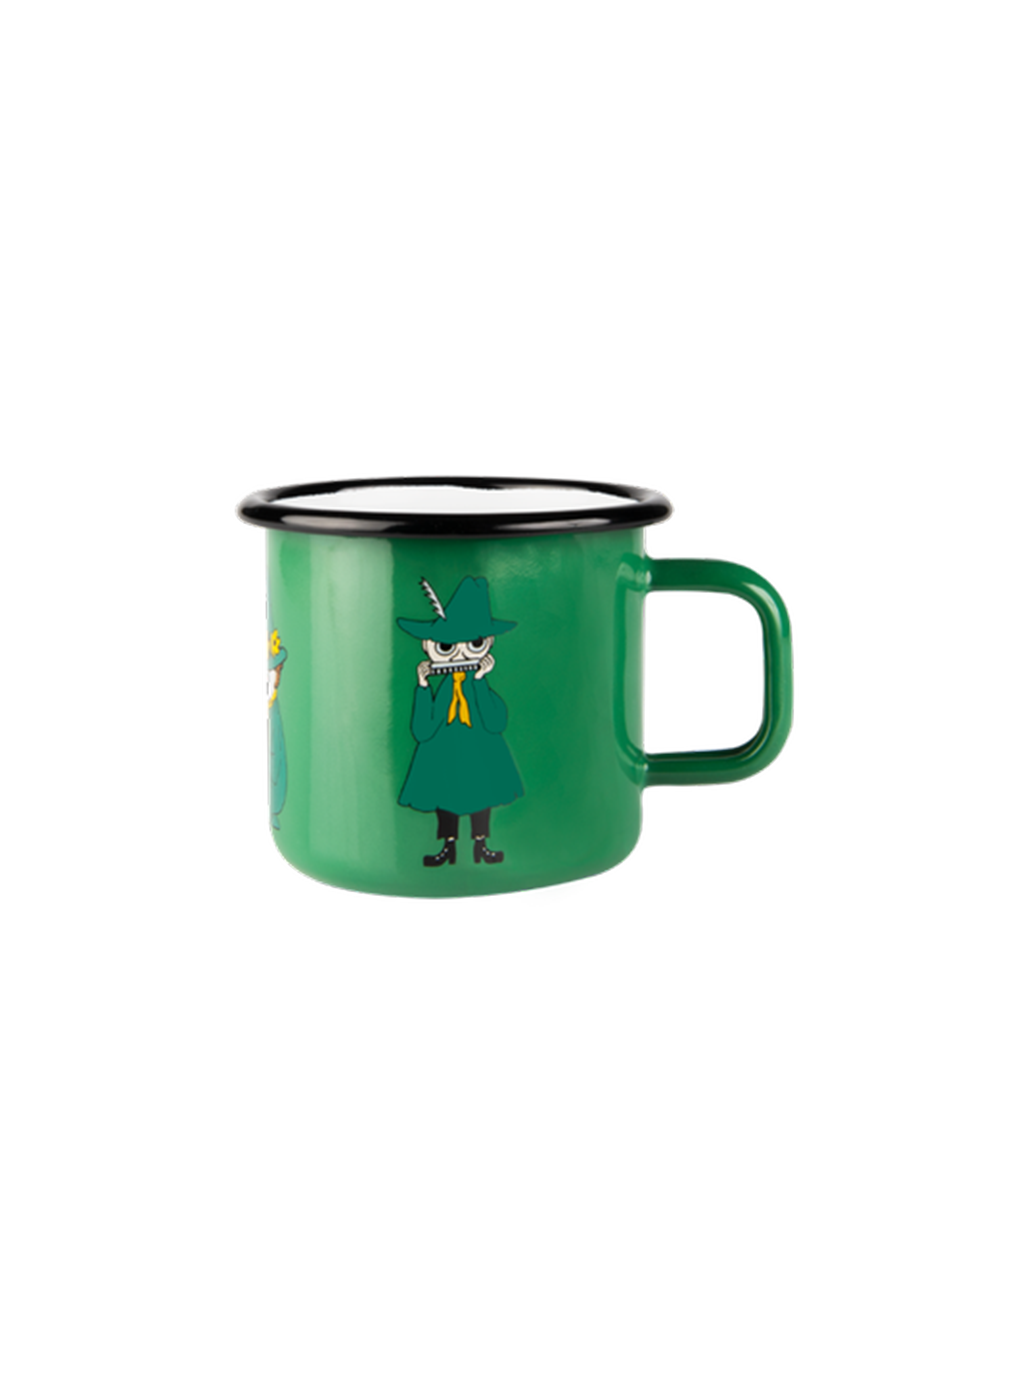 Retro enamel mug Moomin 3.7 dl